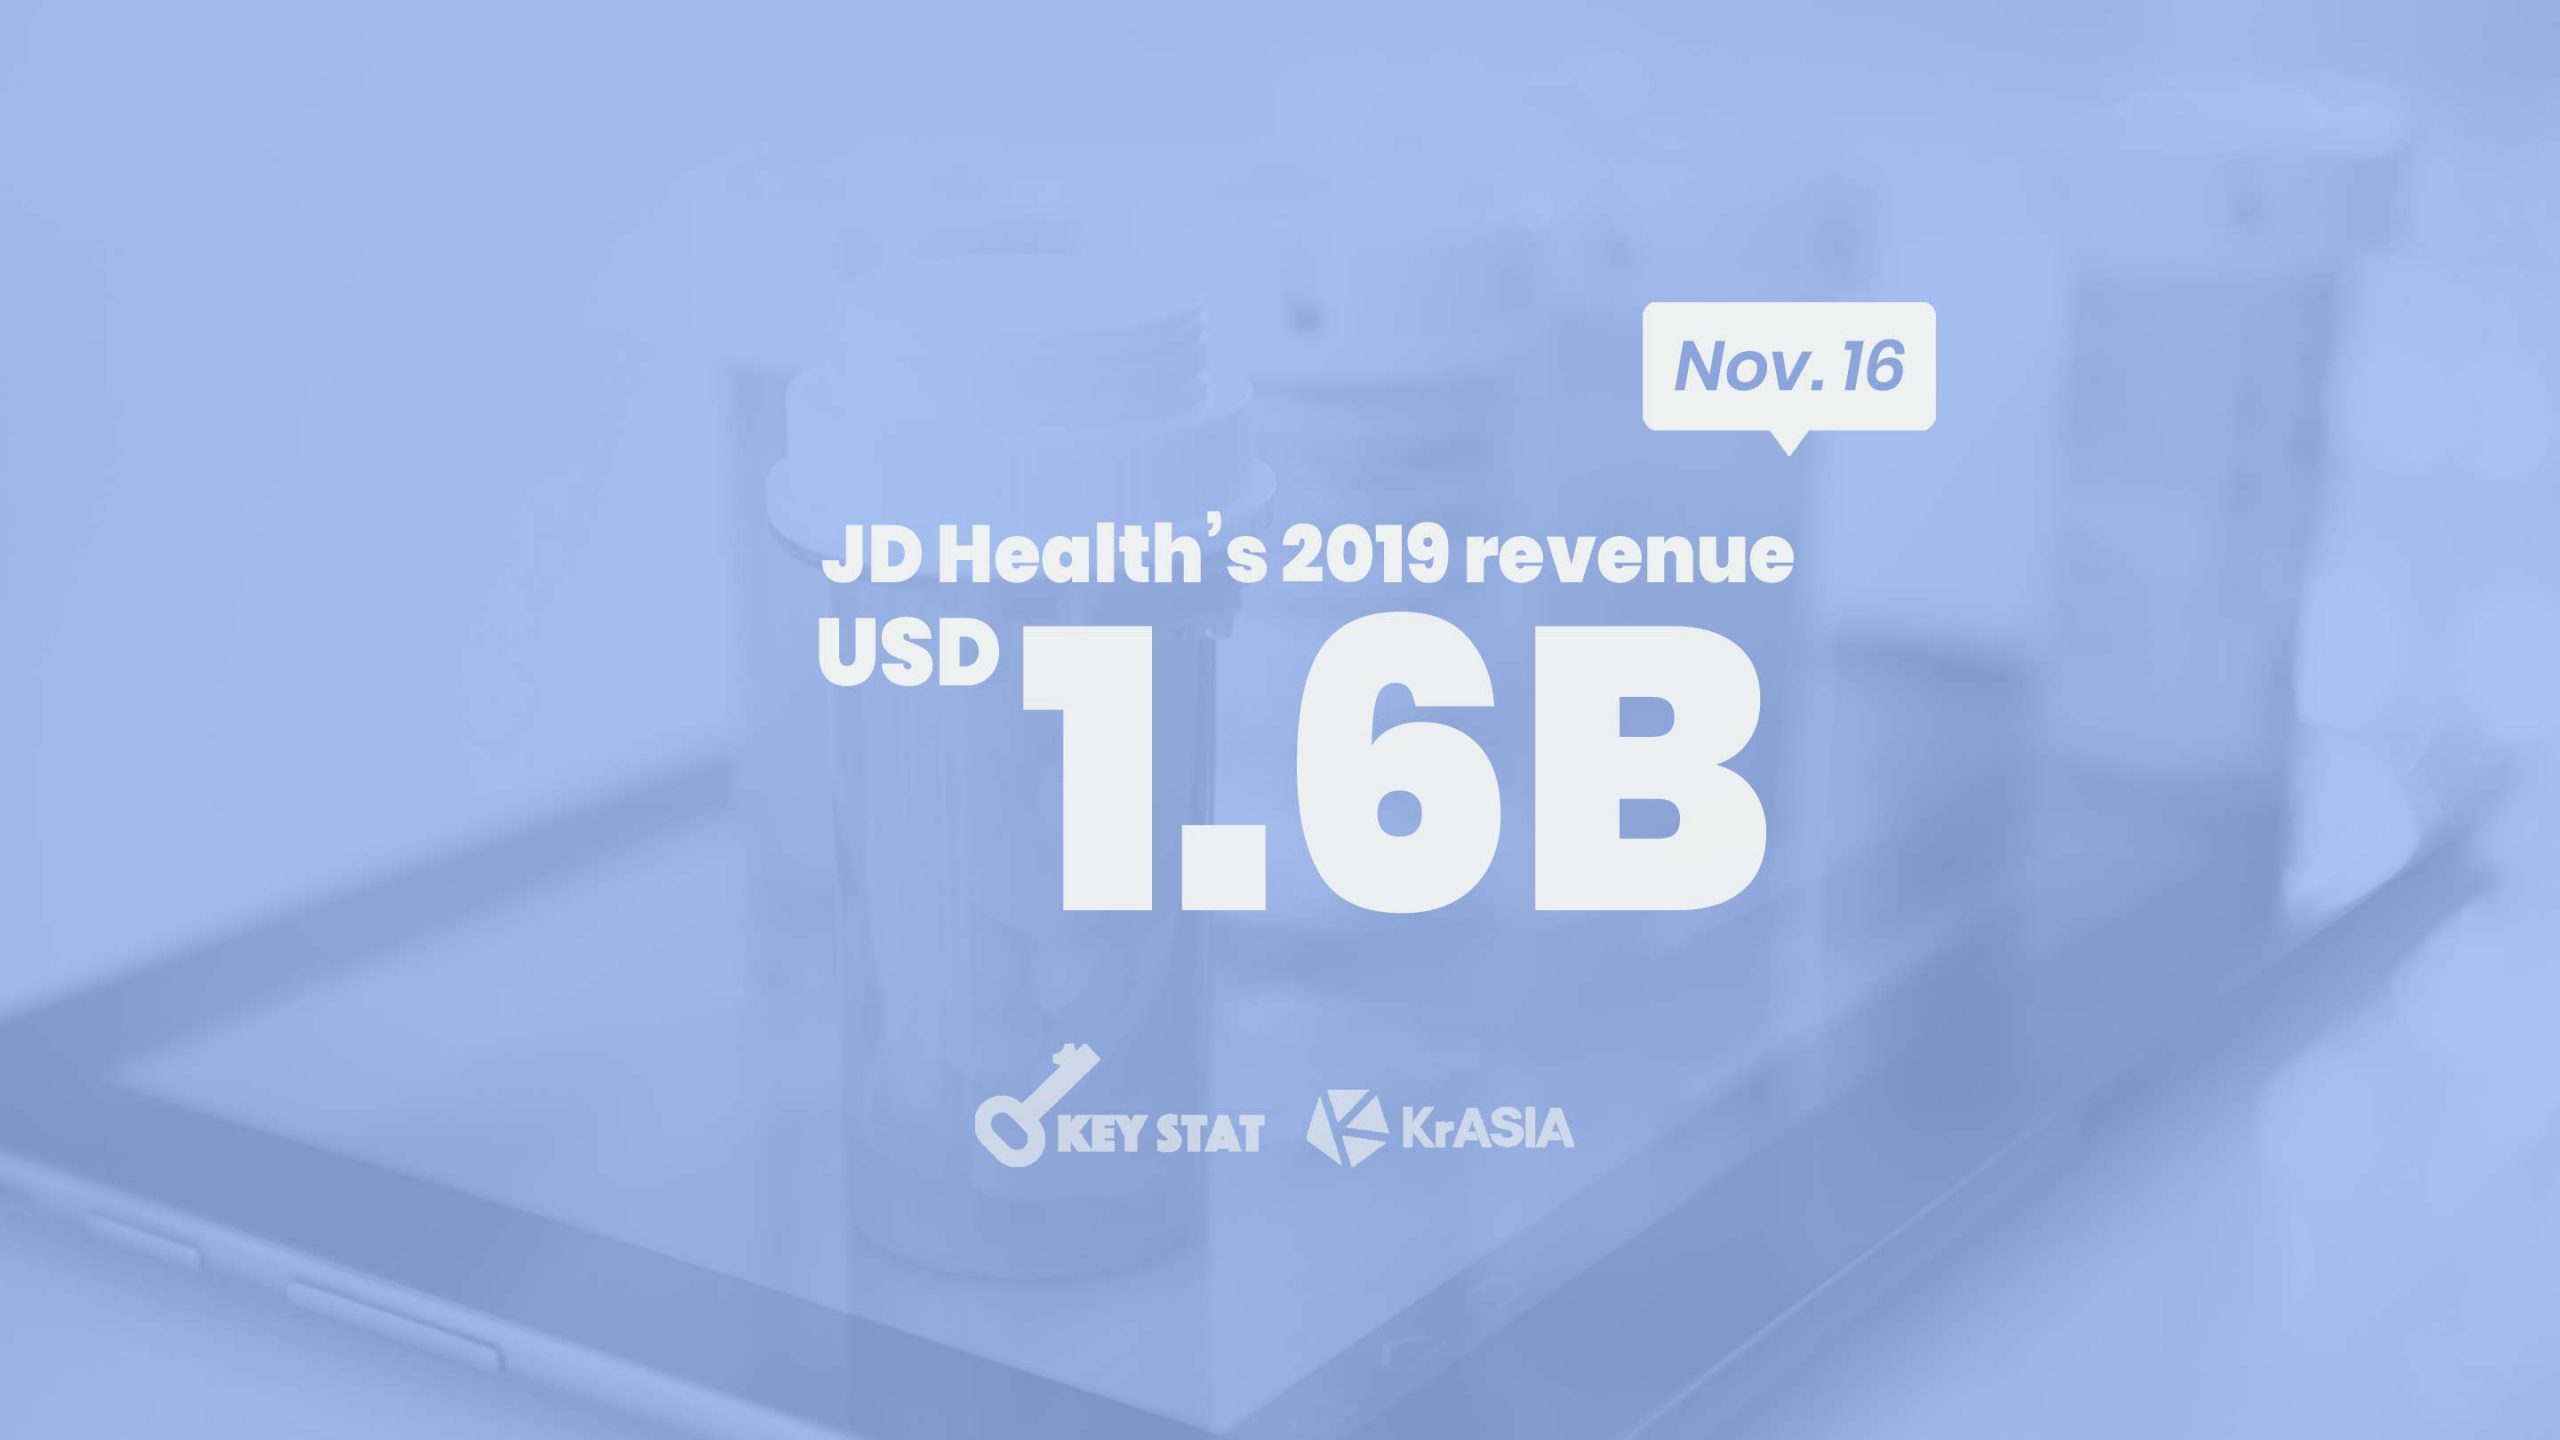 KEY STAT | China’s biggest online healthcare platform JD Health to list in Hong Kong